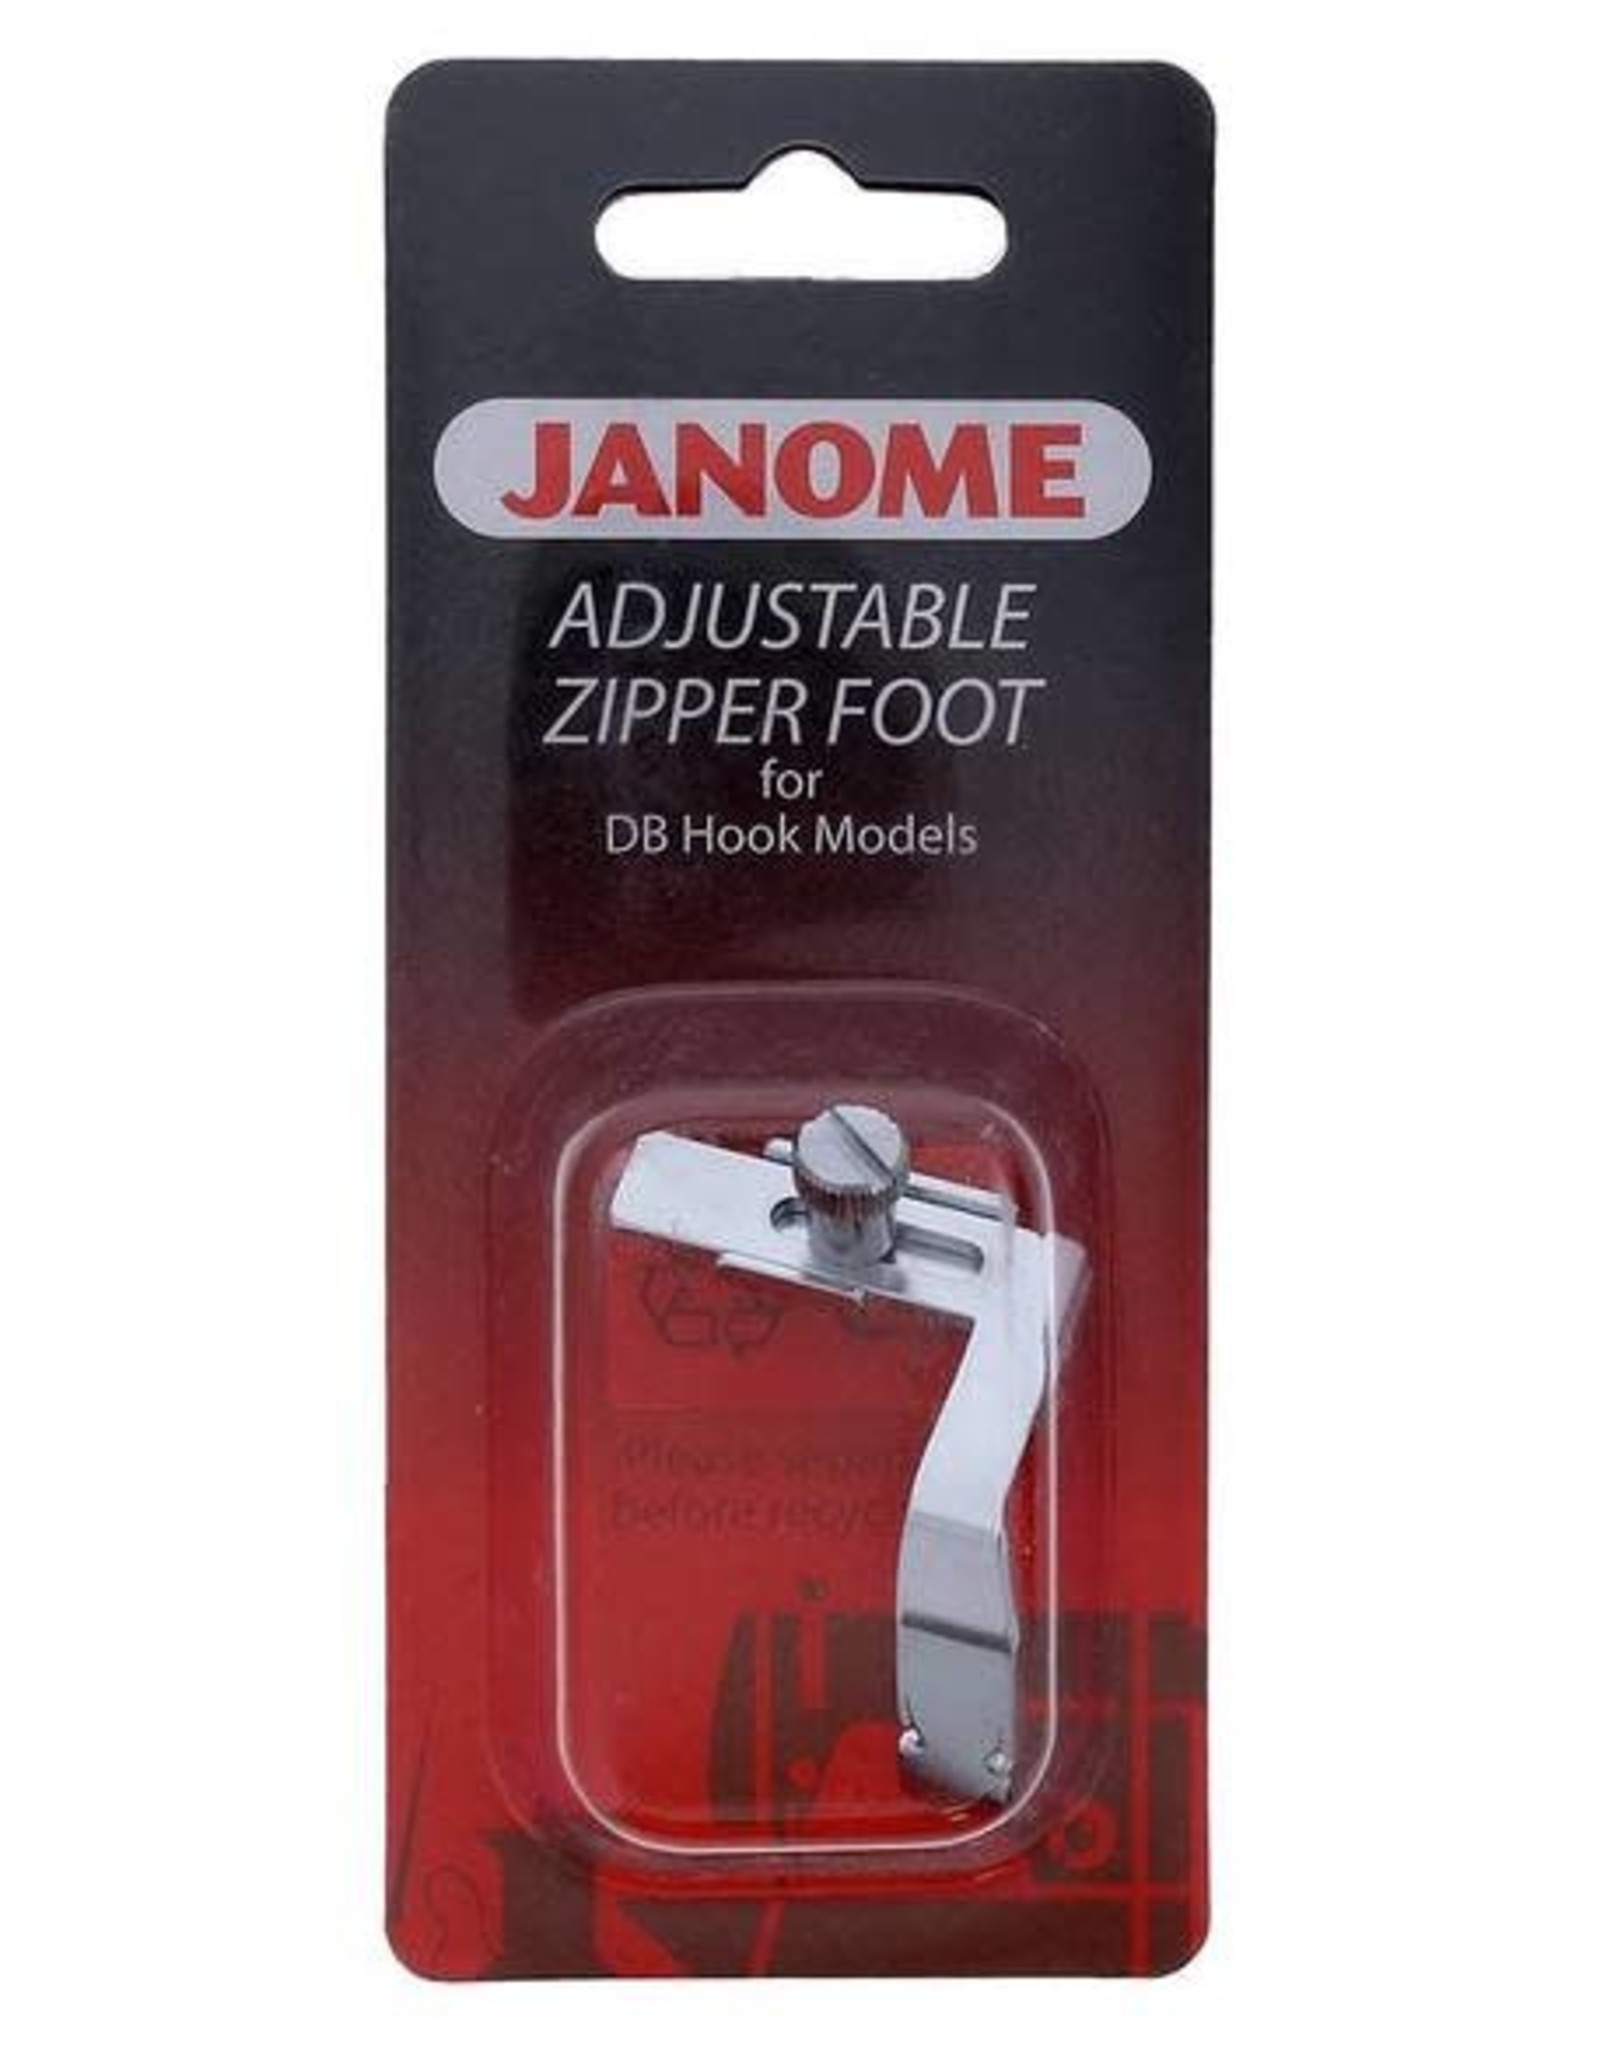 Janome Adjustable zipper foot 1600 p series 767408011